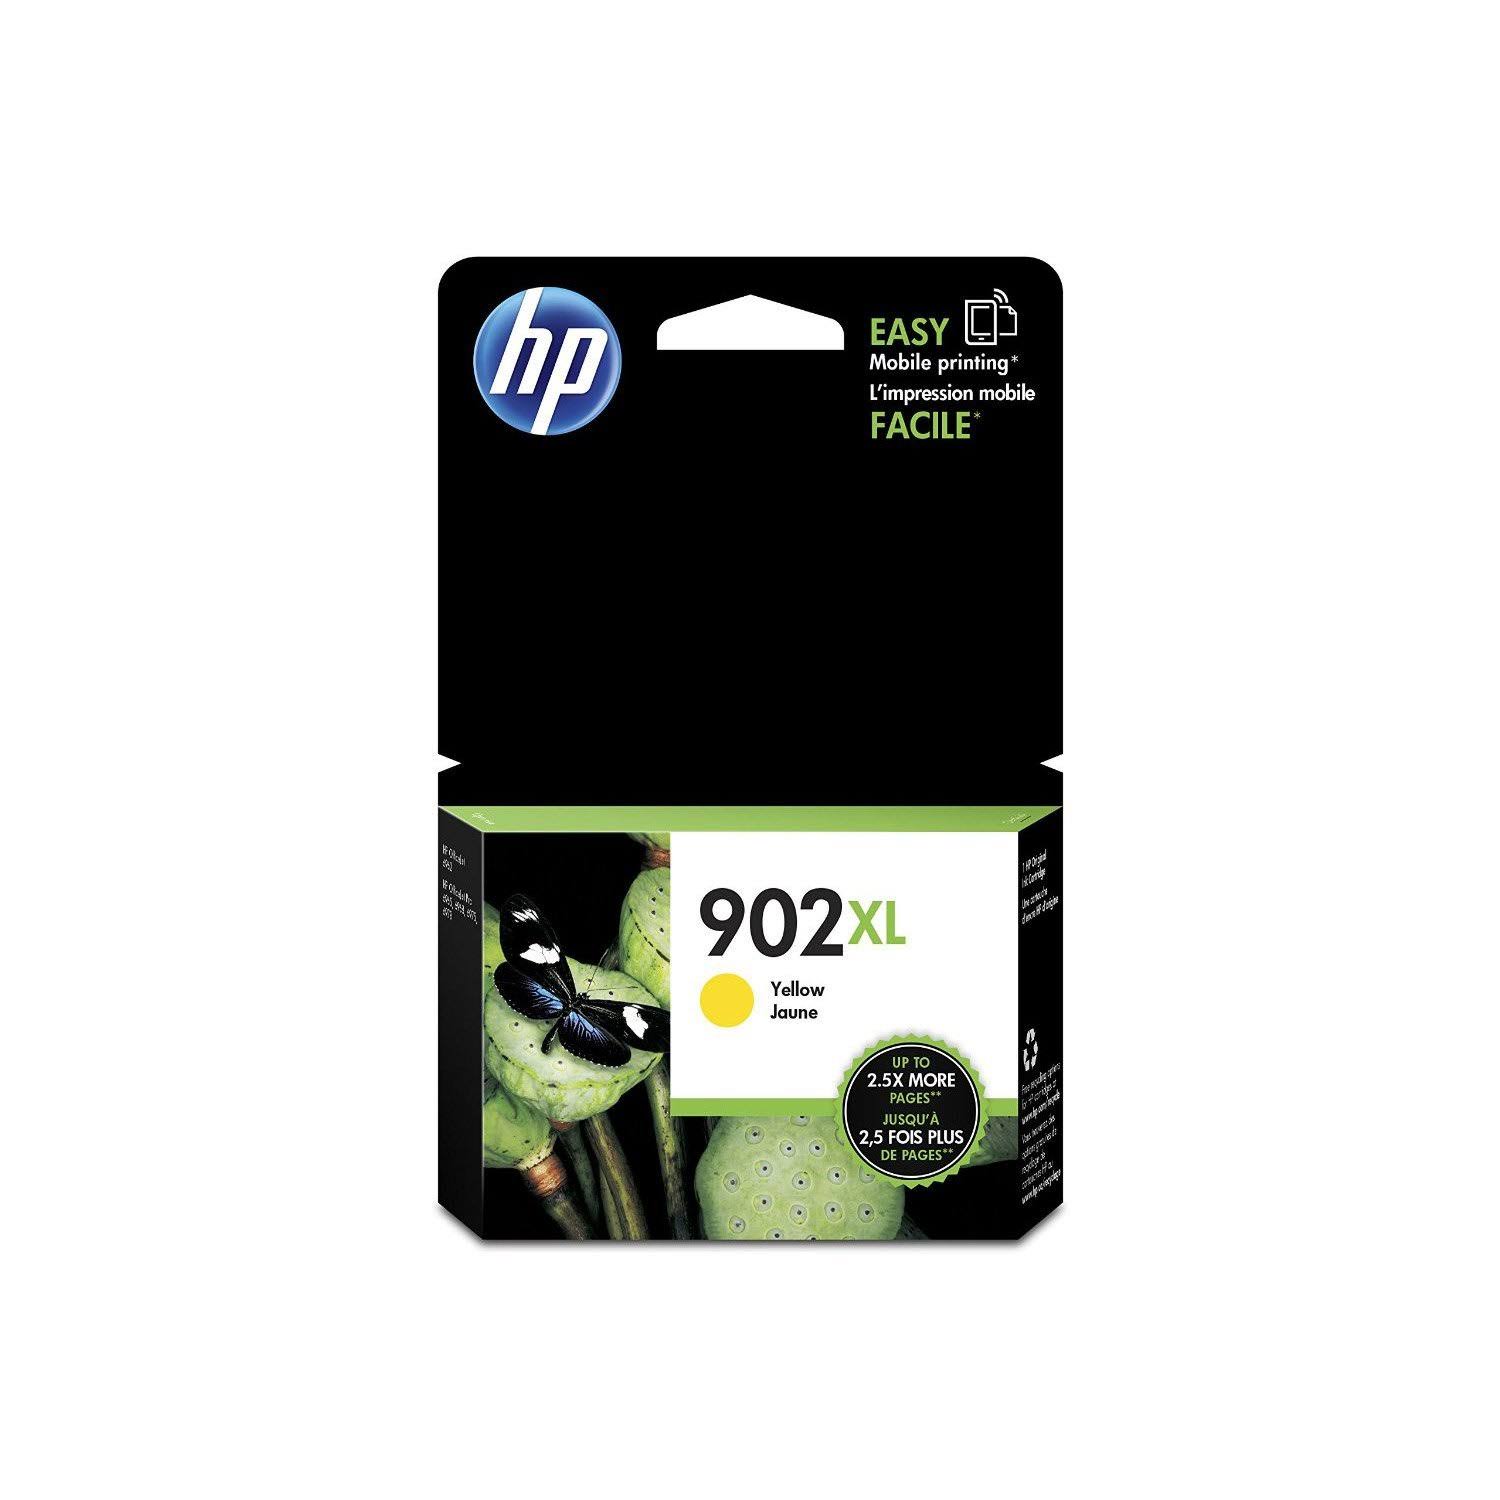 HP 903XL Ink Cartridge - Yellow, High-Yield